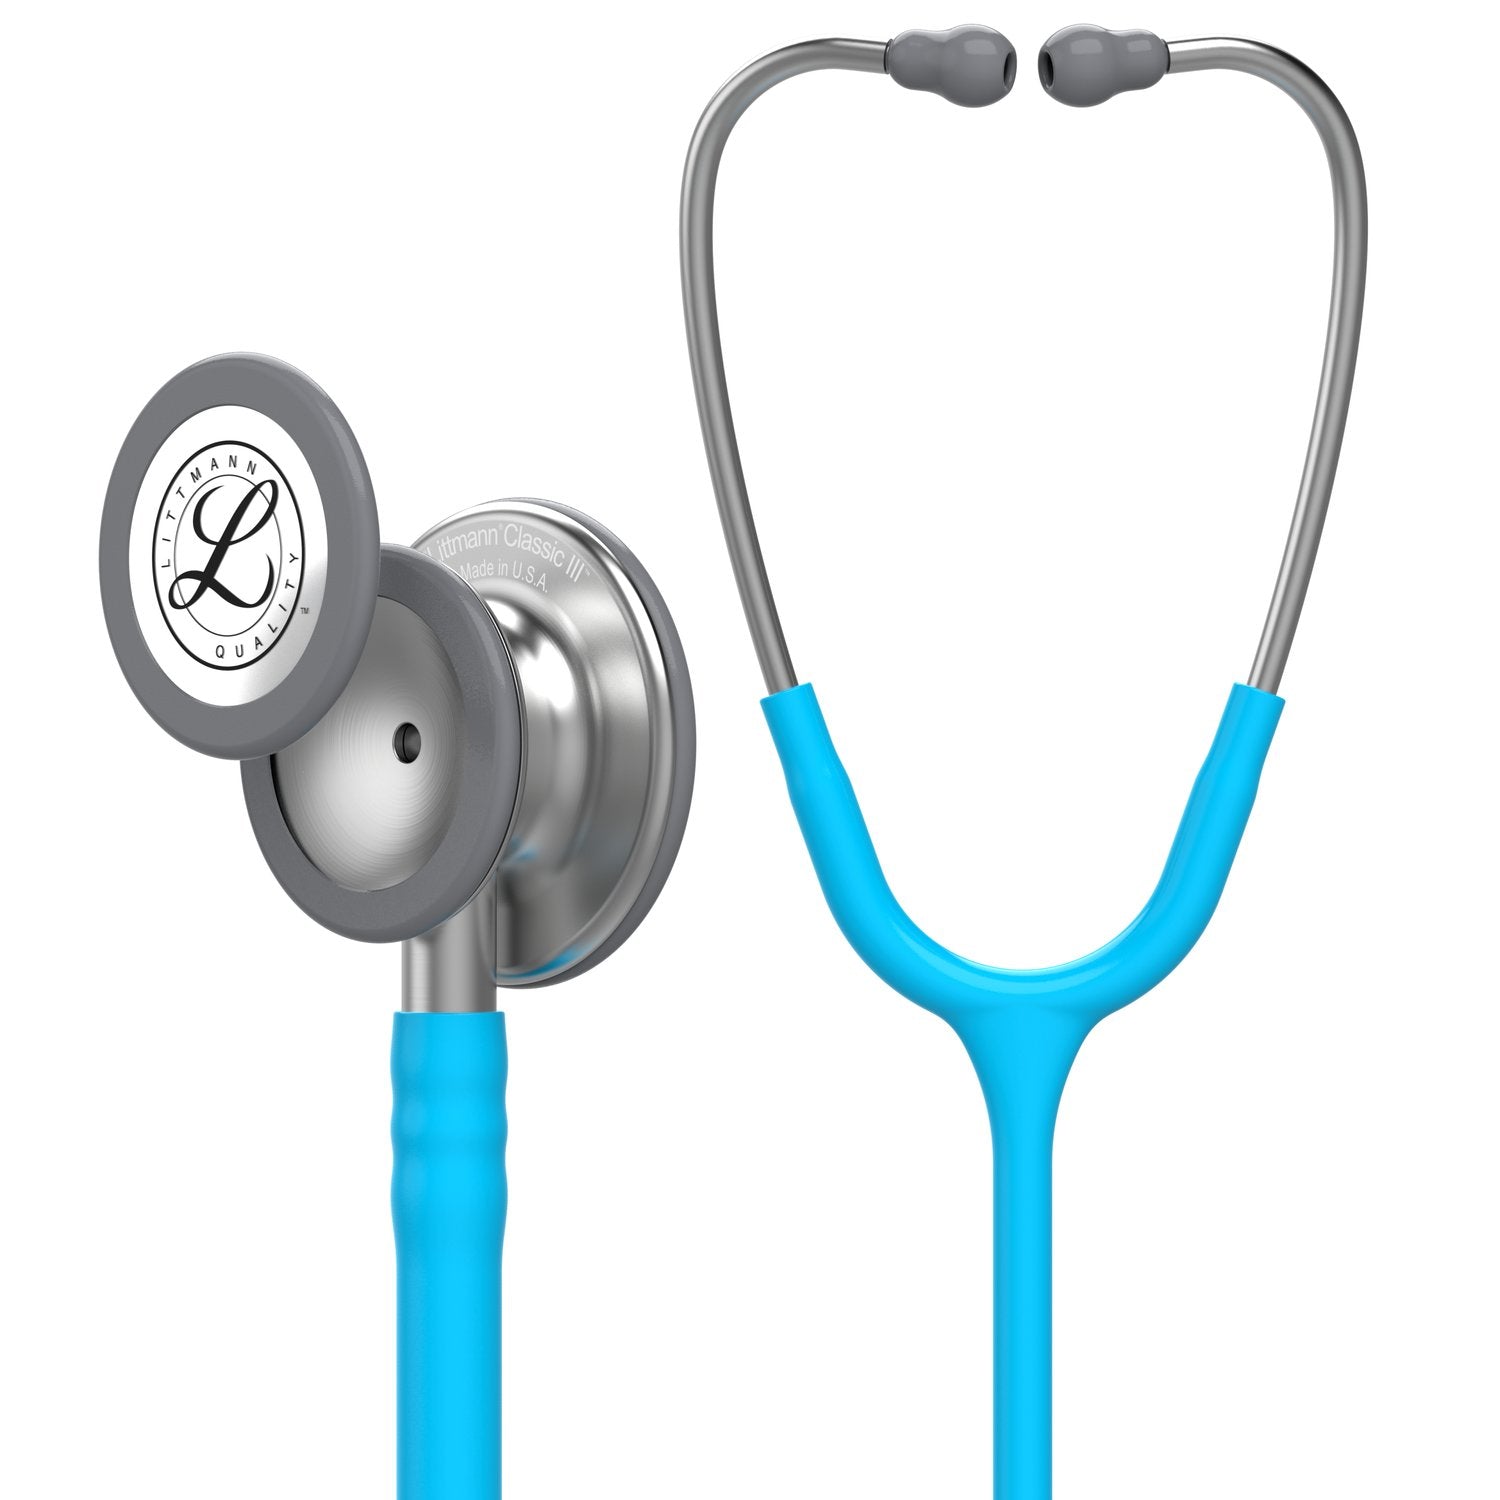 Littmann Classic III Monitoring Stethoscope: Turquoise 5835 Stethoscopes 3M Littmann   